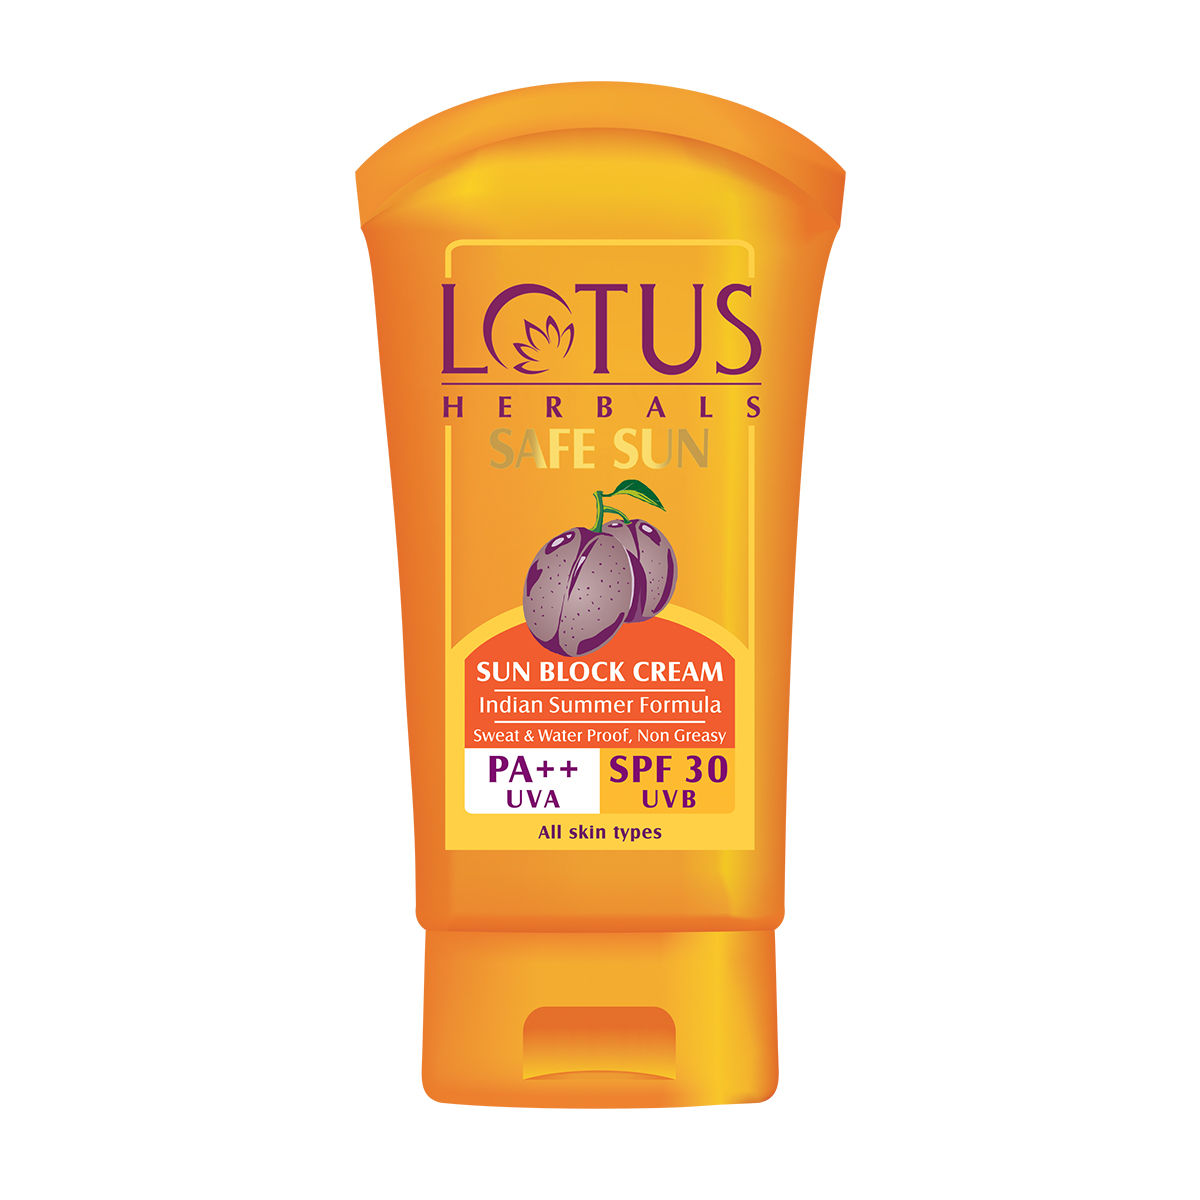 Lotus Herbals Safe Sun Sun Block Cream SPF 30, 50 gm, Pack of 1 